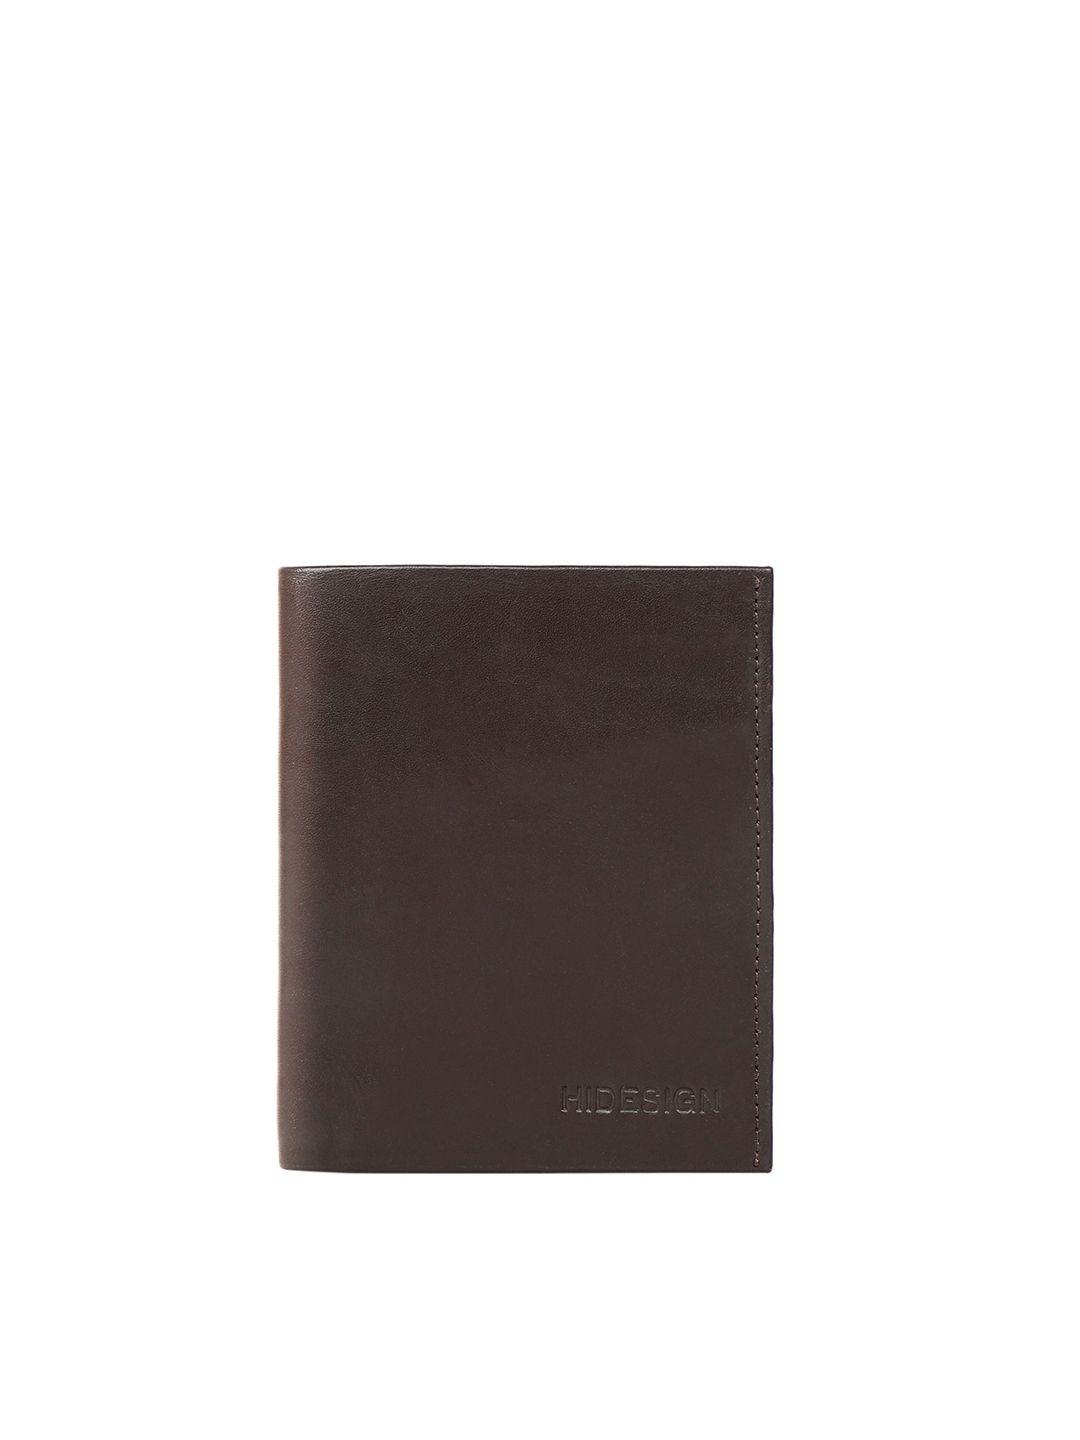 hidesign men brown solid two fold wallet